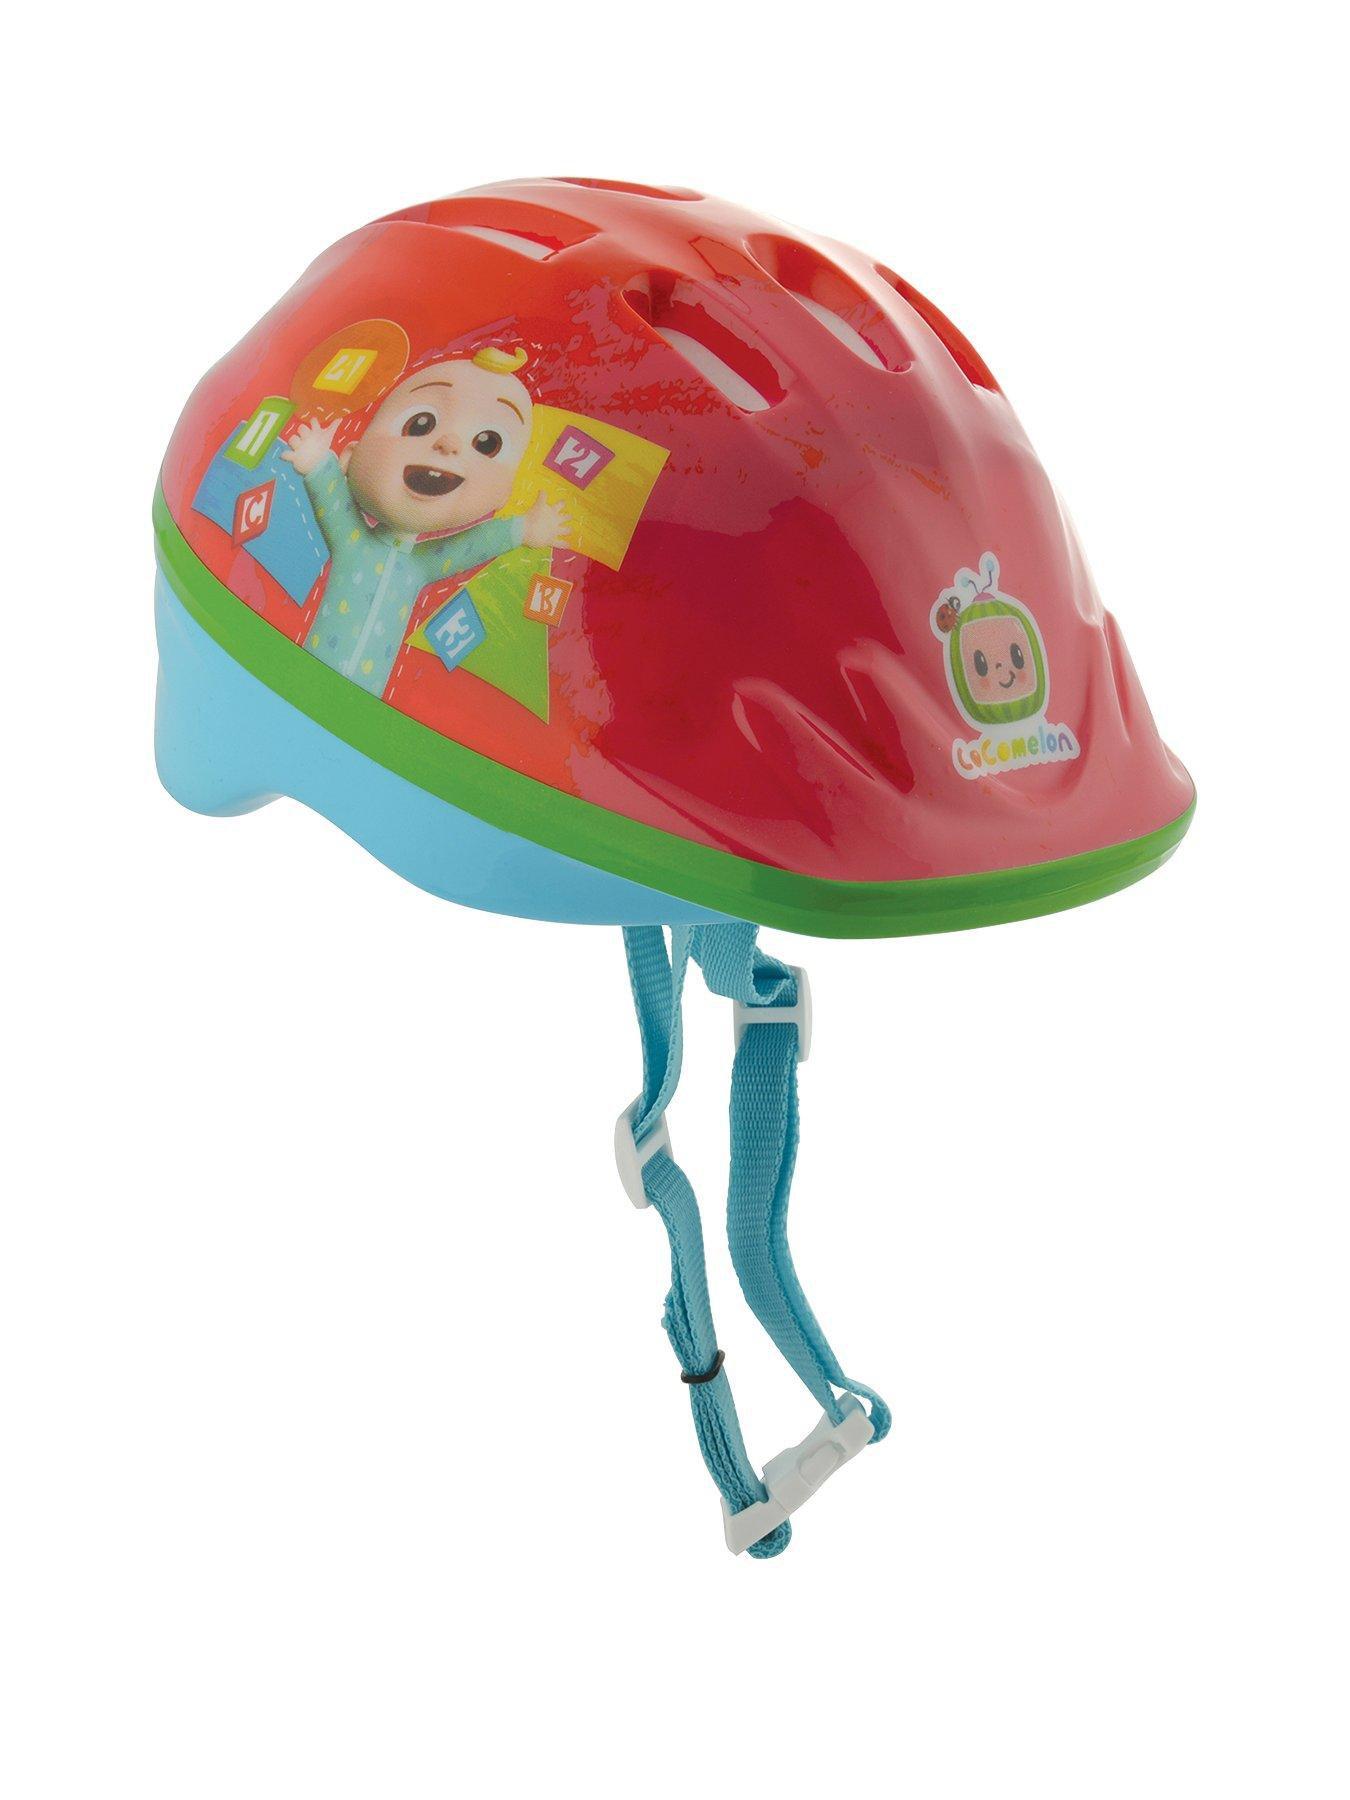 Paw Patrol Multi-Sport Kids' Bike Helmet w/Adjustable Straps, Blue/Red,  Ages 5+